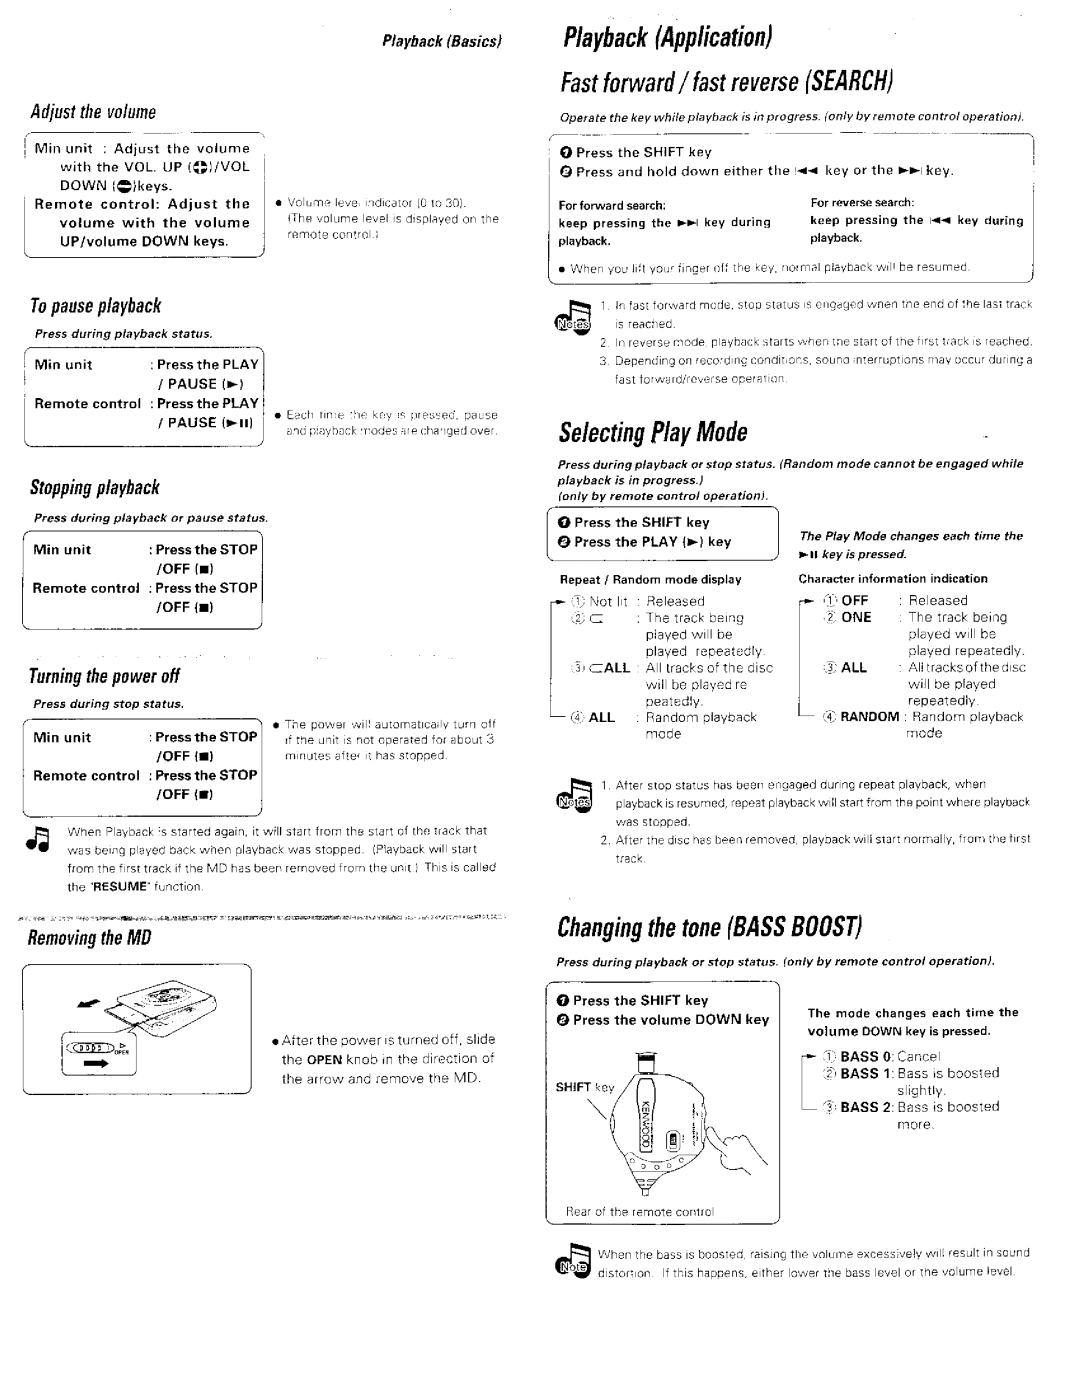 Kenwood DMC-J3 manual 